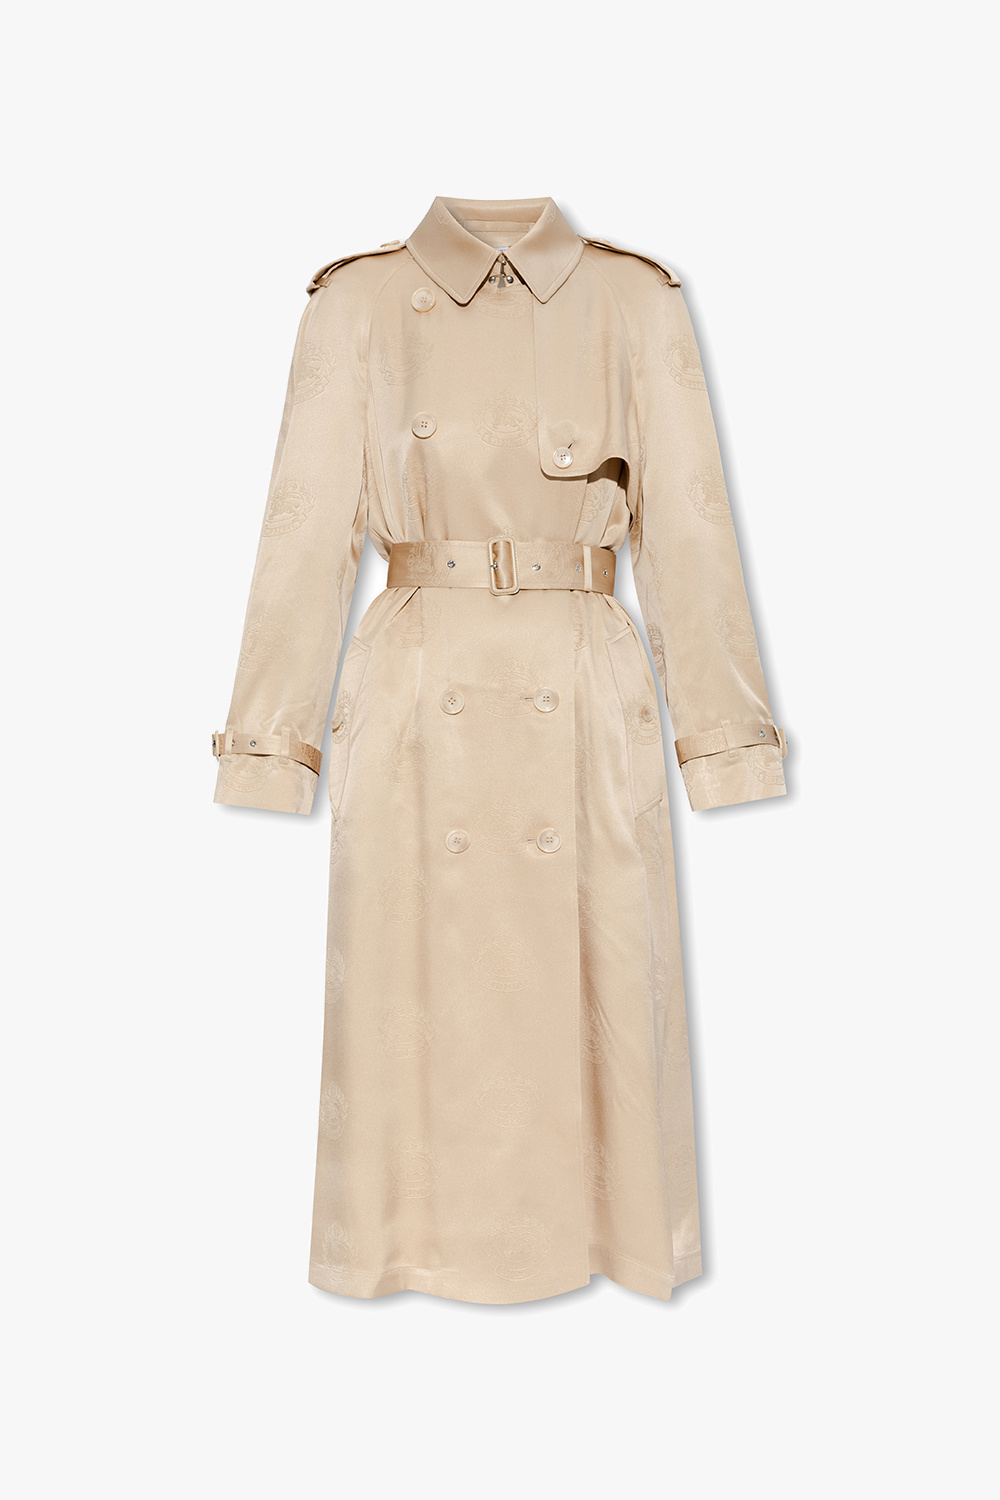 Burberry 'Pedley' silk trench coat | Women's Clothing | Burberry MEN SHIRTS  FORMAL | StclaircomoShops